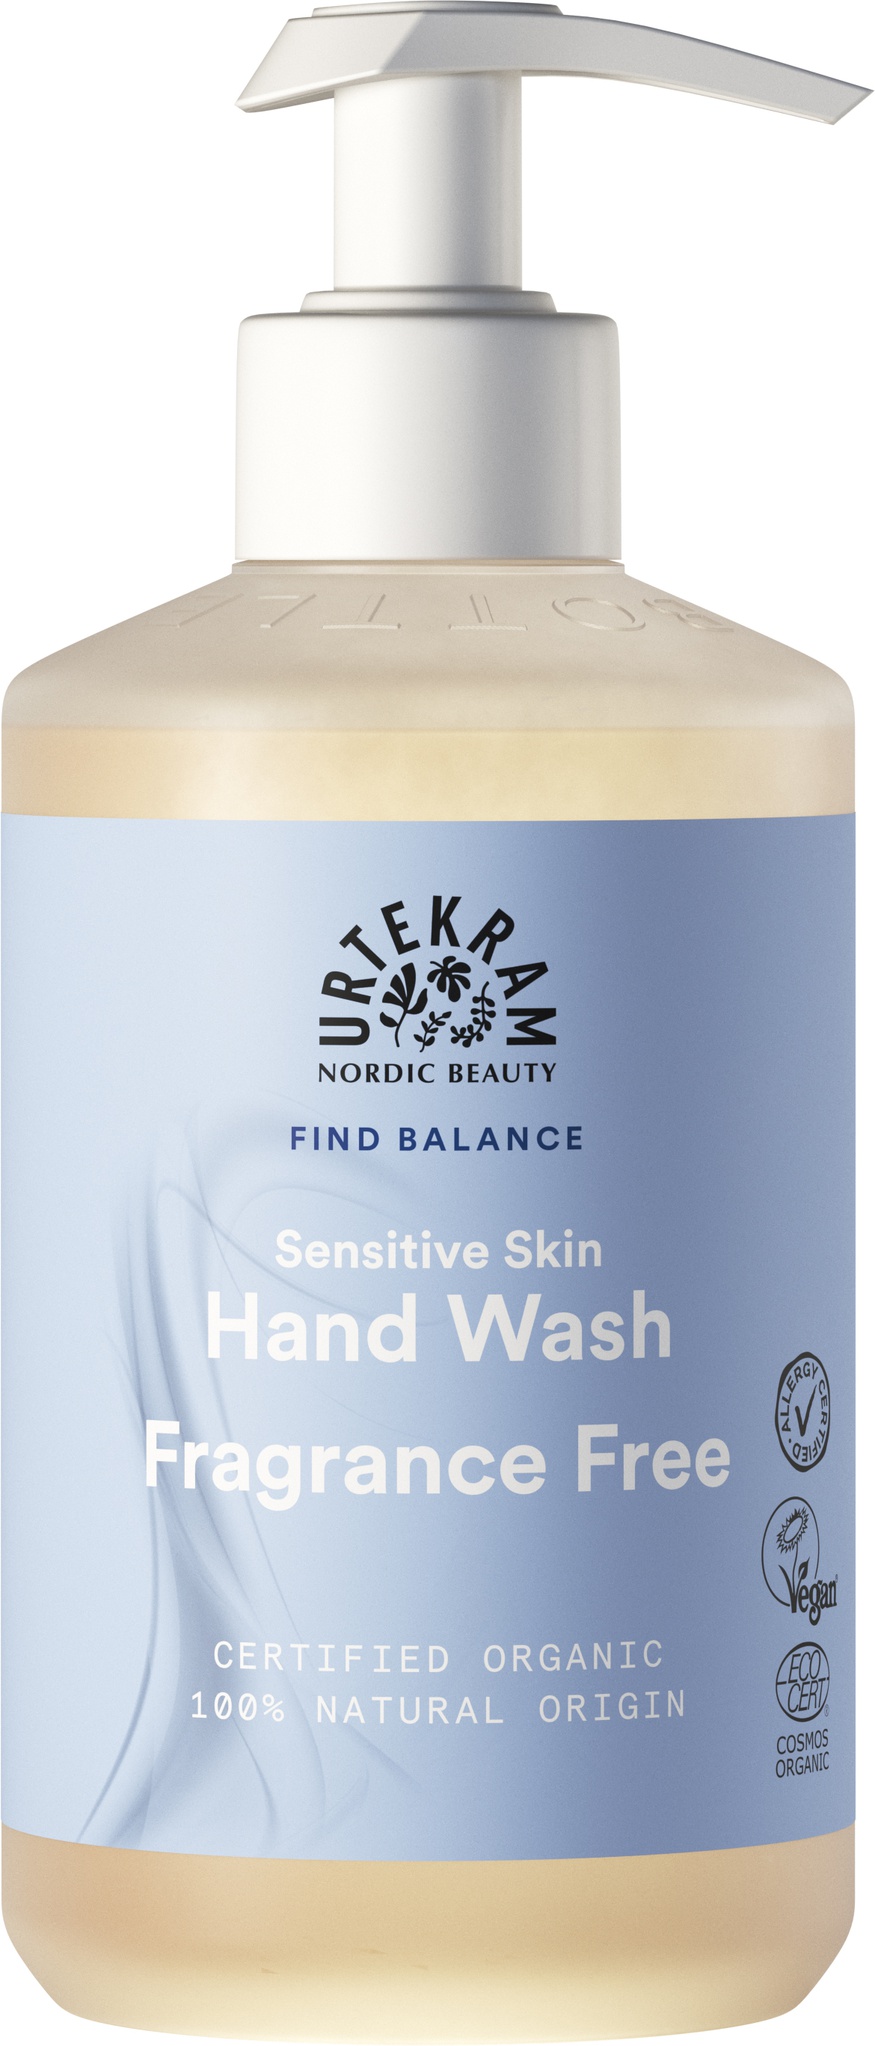 Urtekram Fragrance Free Hand Wash